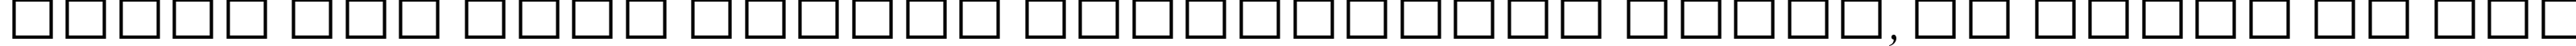 Пример написания шрифтом Perpetua Italic текста на русском